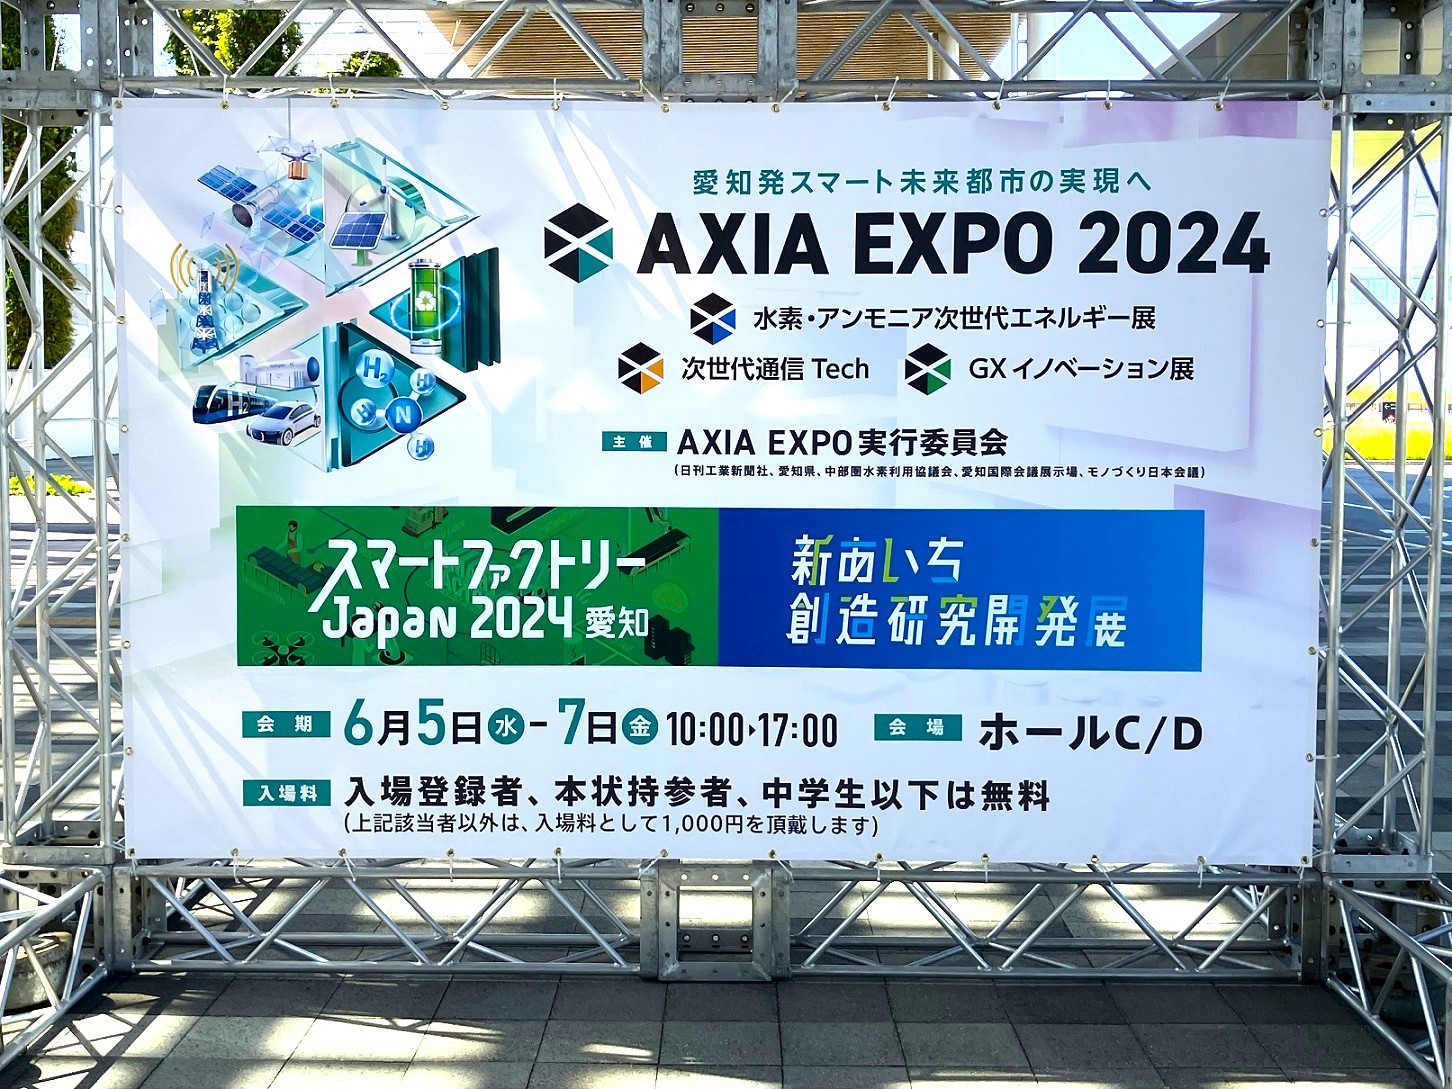 AXIA EXPO 2024（水素・アンモニア次世代エネルギー展） に出展